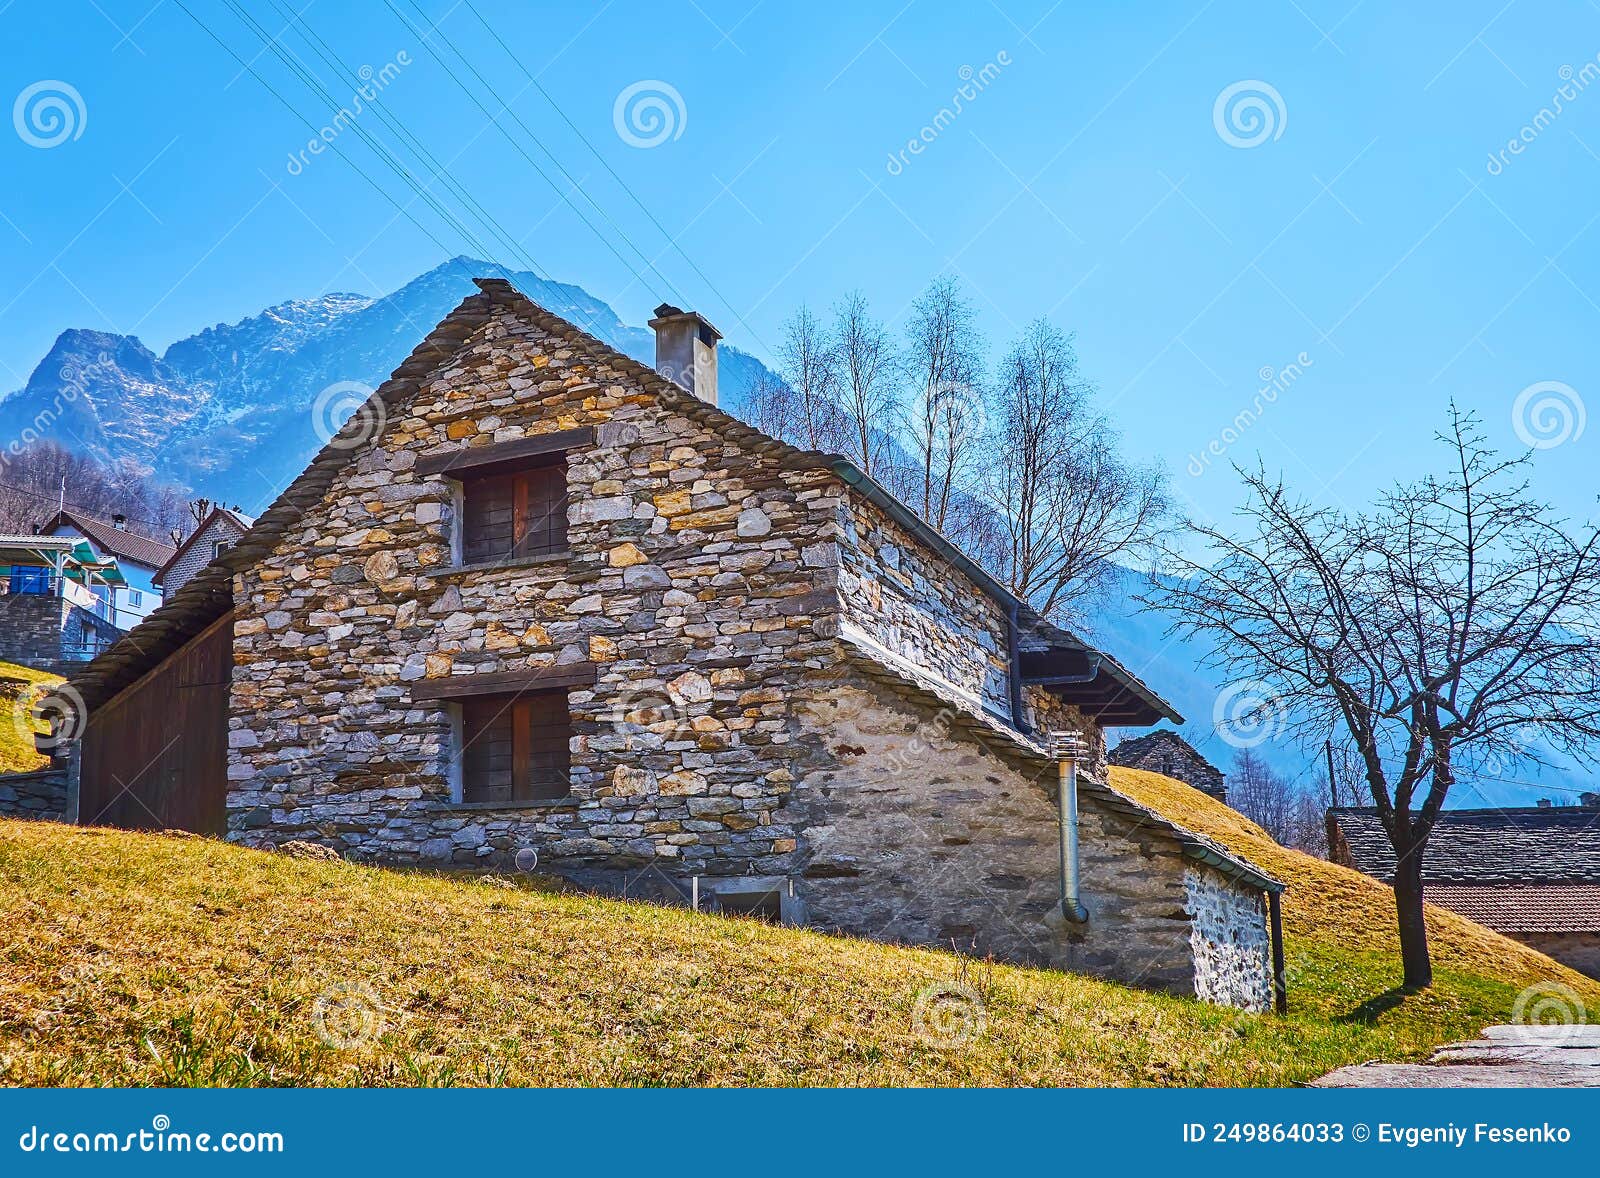 the old stone house in frasco, valle verzasca, switzerland